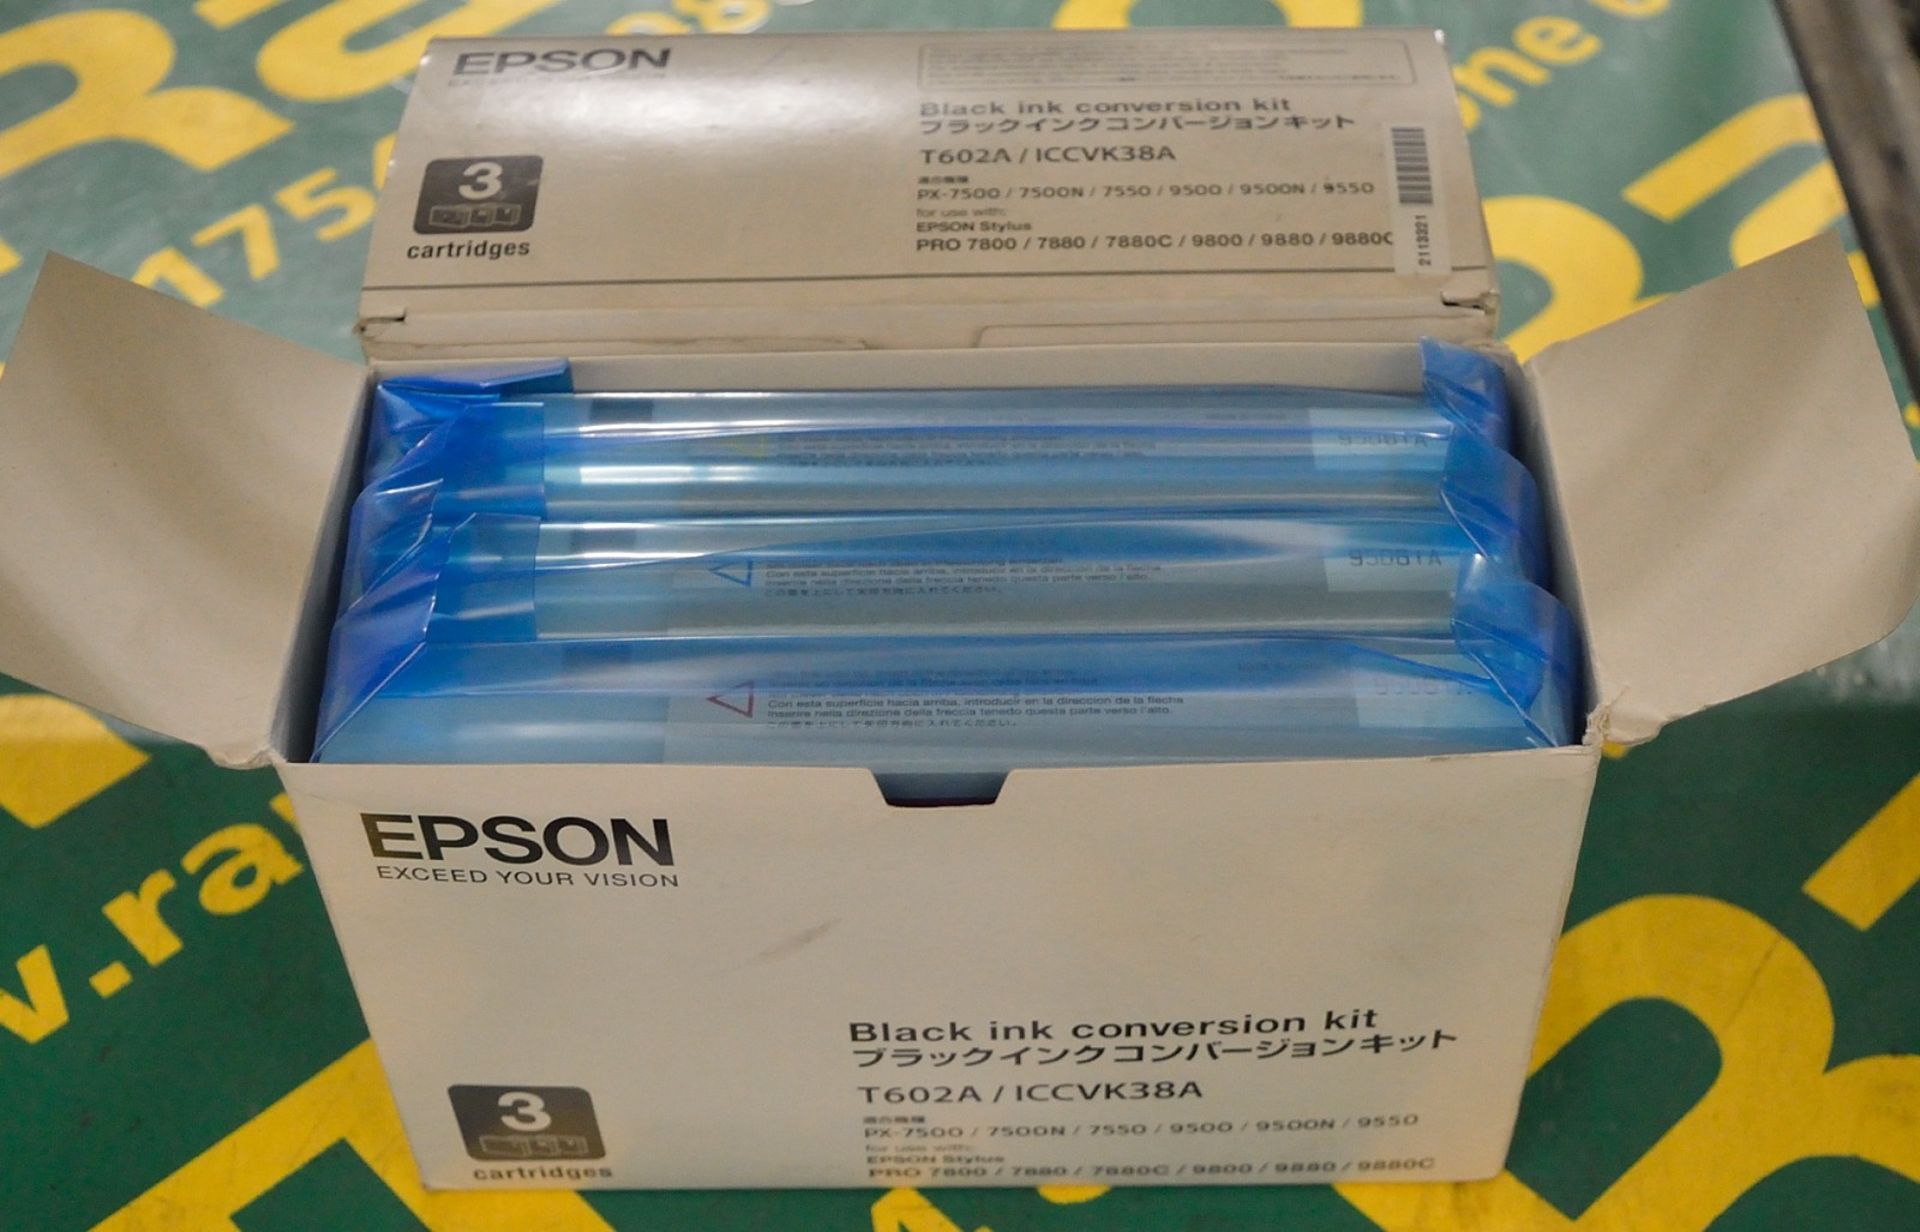 2x Epson Black Ink Conversion Kits - T602A/ICCVK38A.